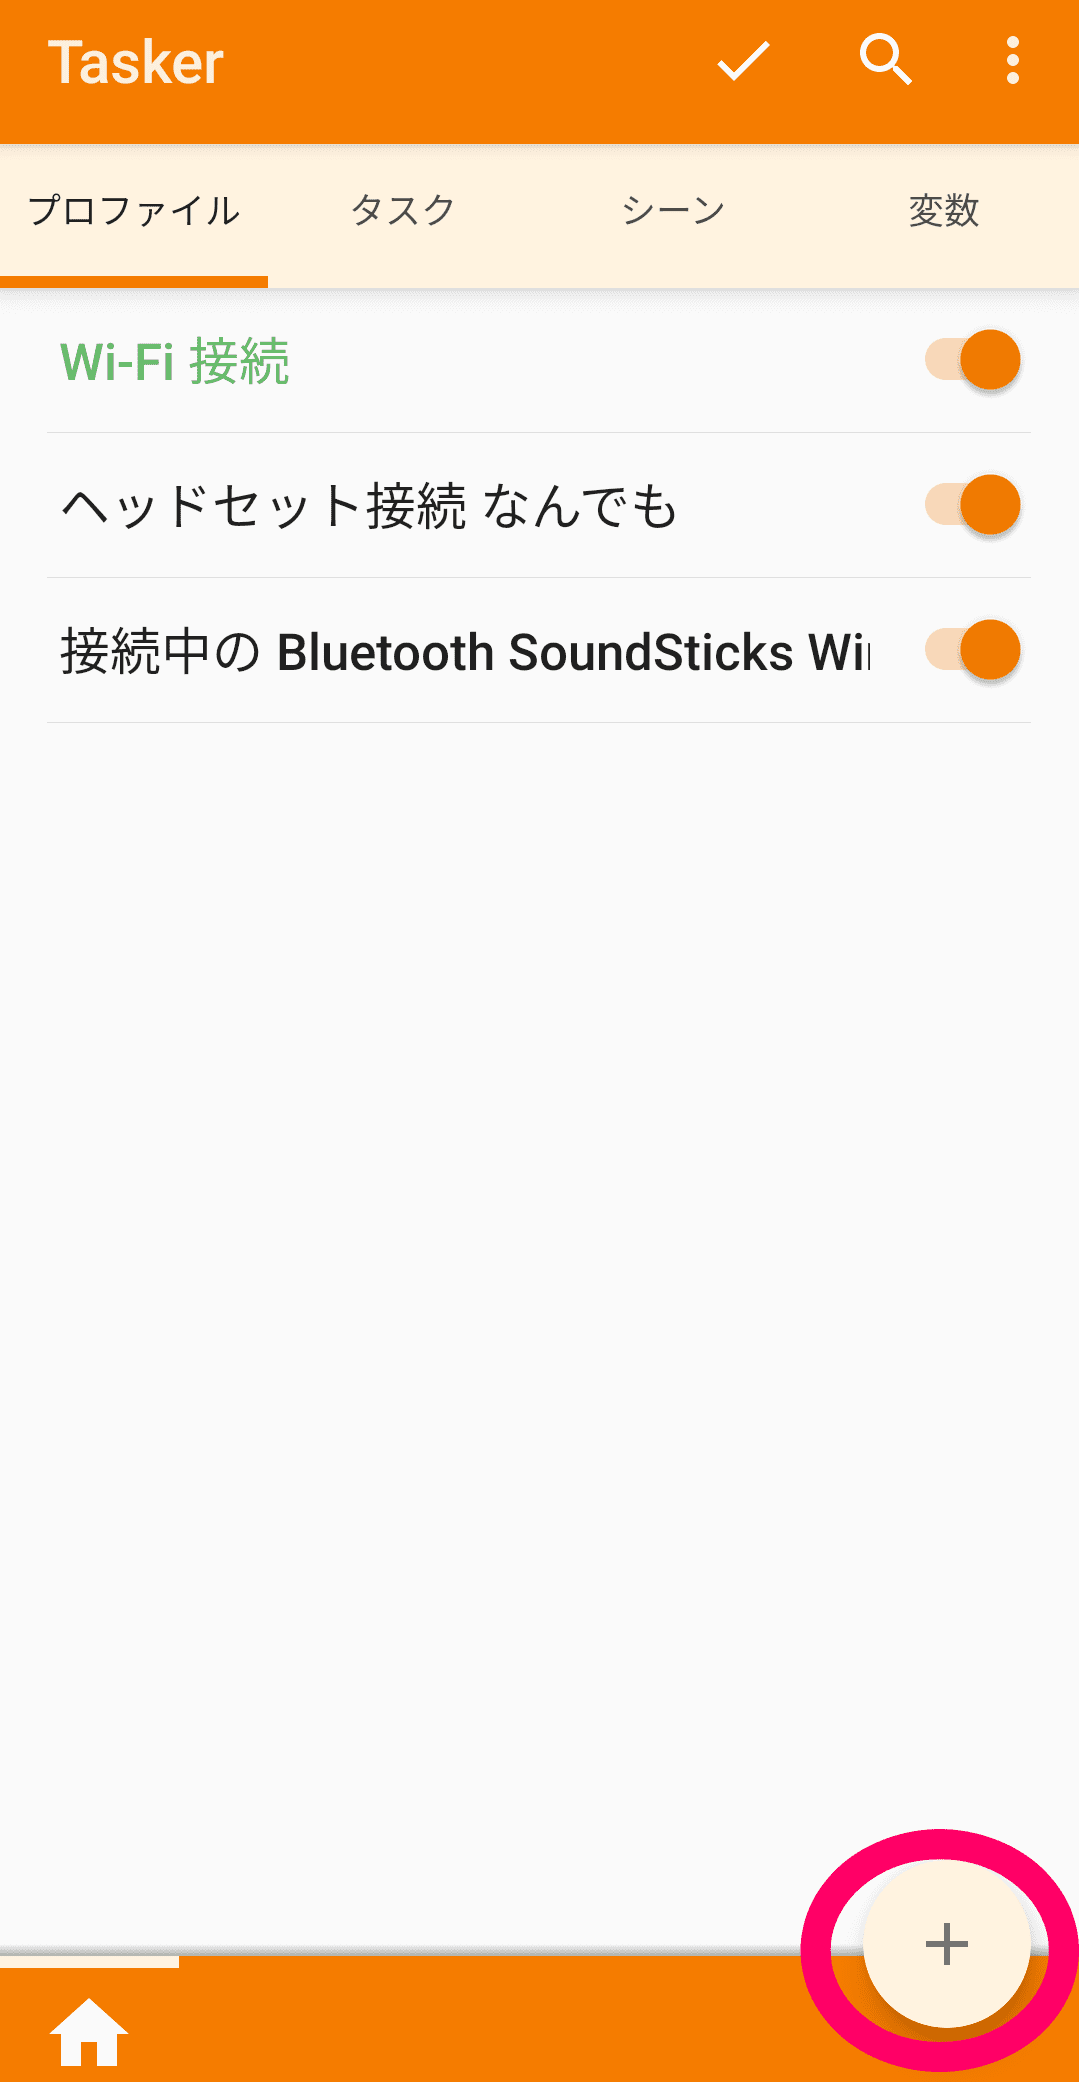 Bluethoothイヤホンに接続したらTaskerアプリで音楽を自動再生させる設定方法